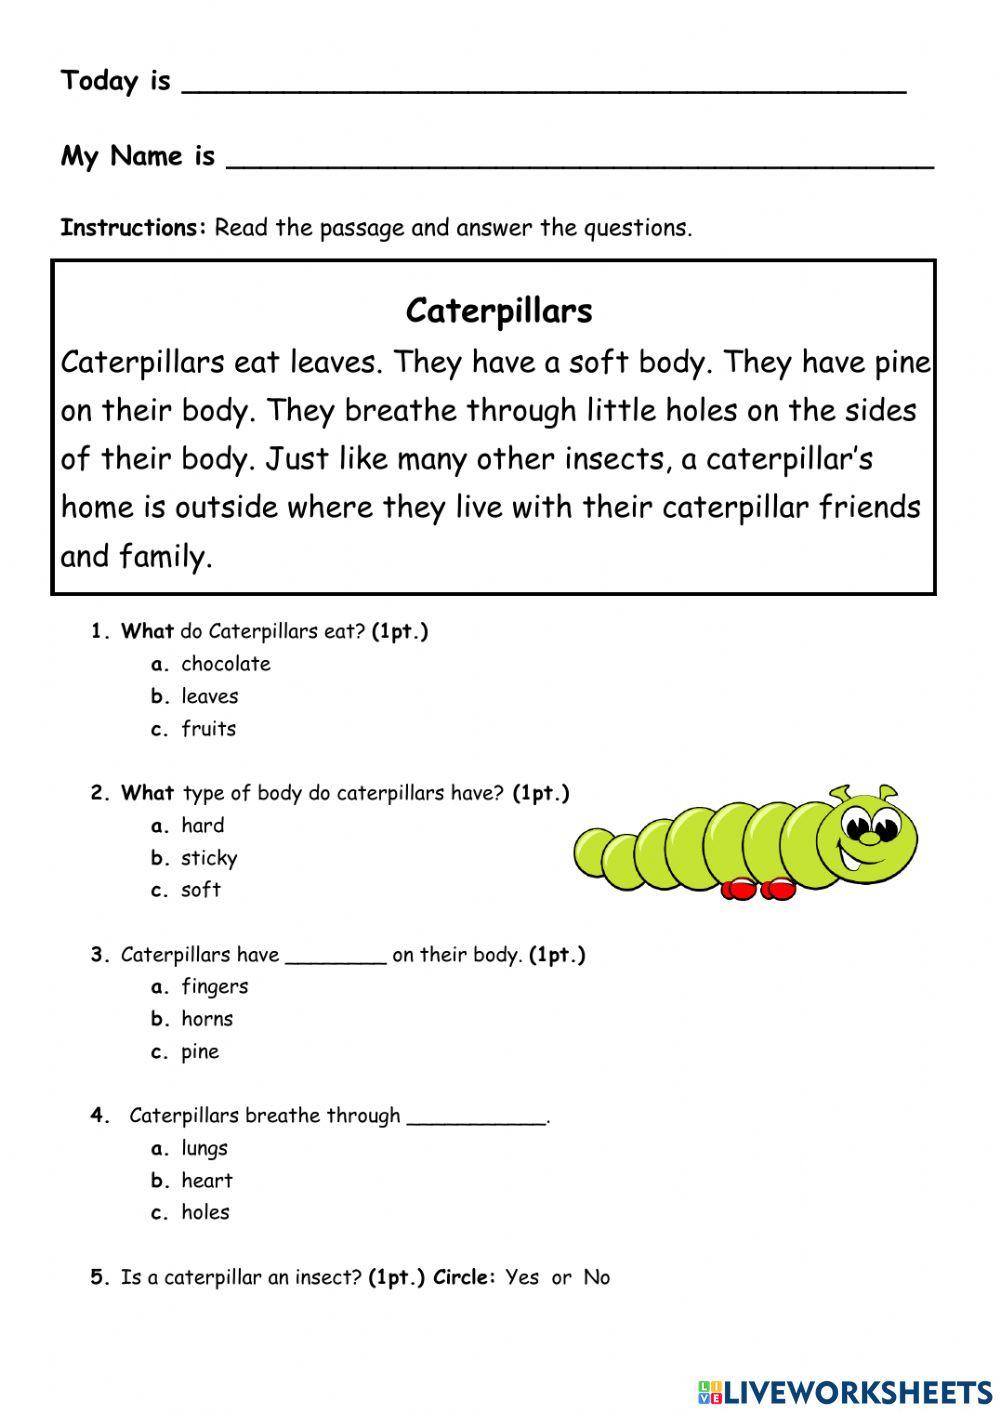 Caterpillars - Reading Comprehension